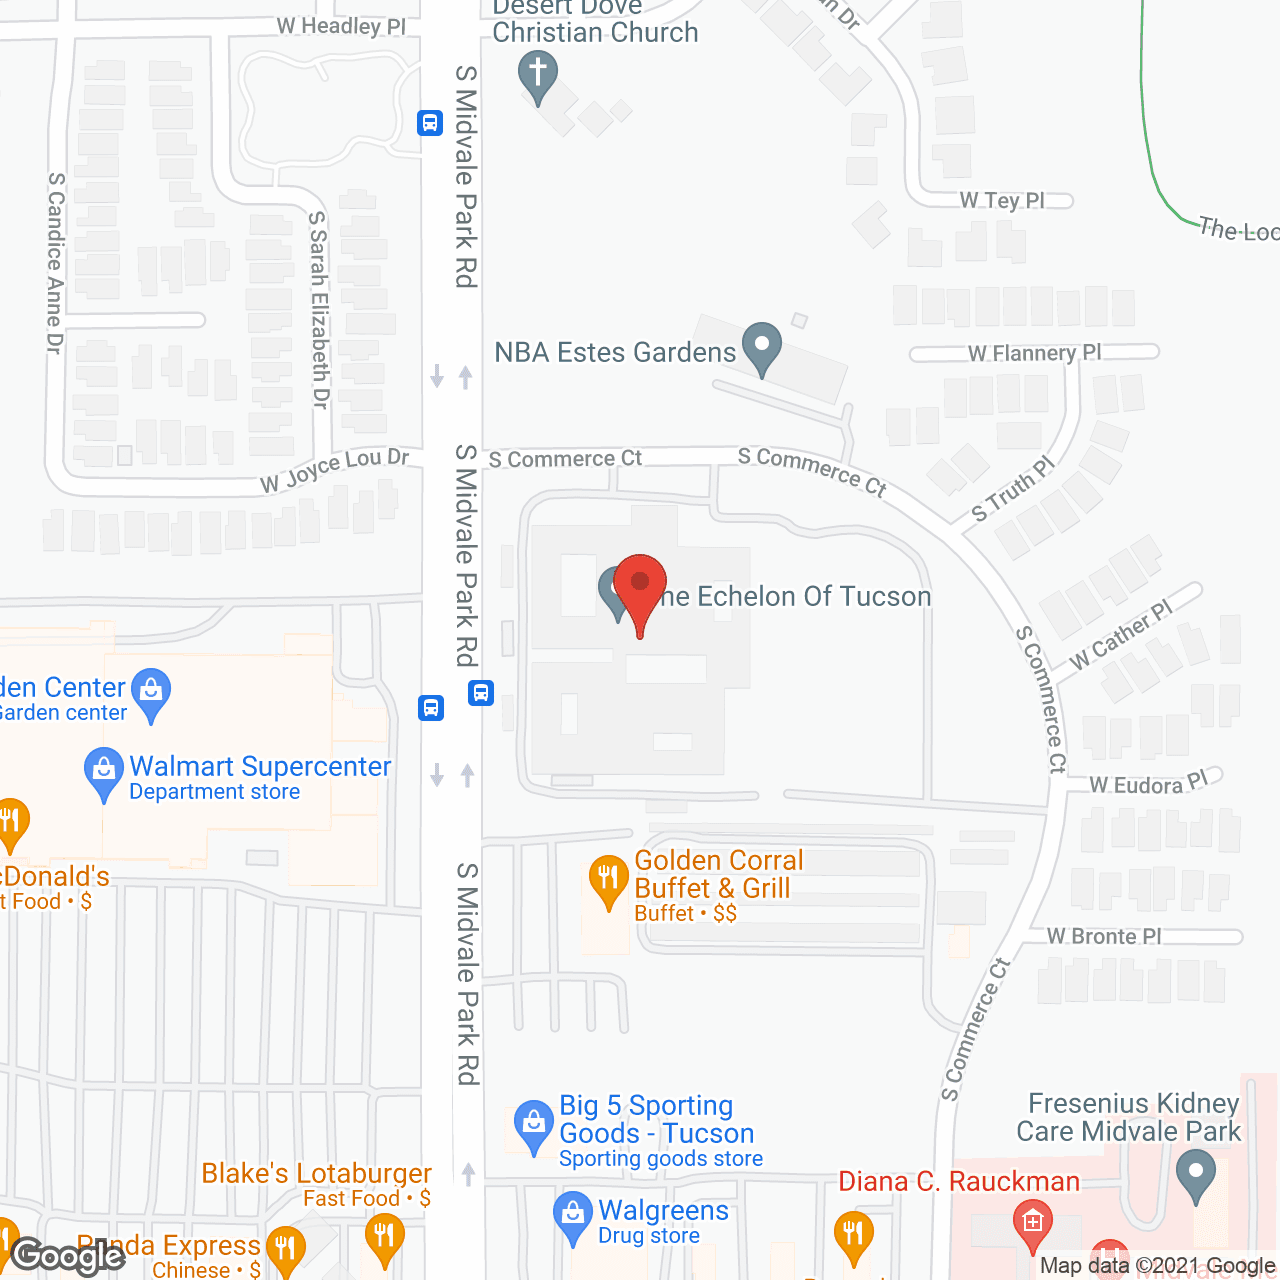 Echelon of Tucson in google map